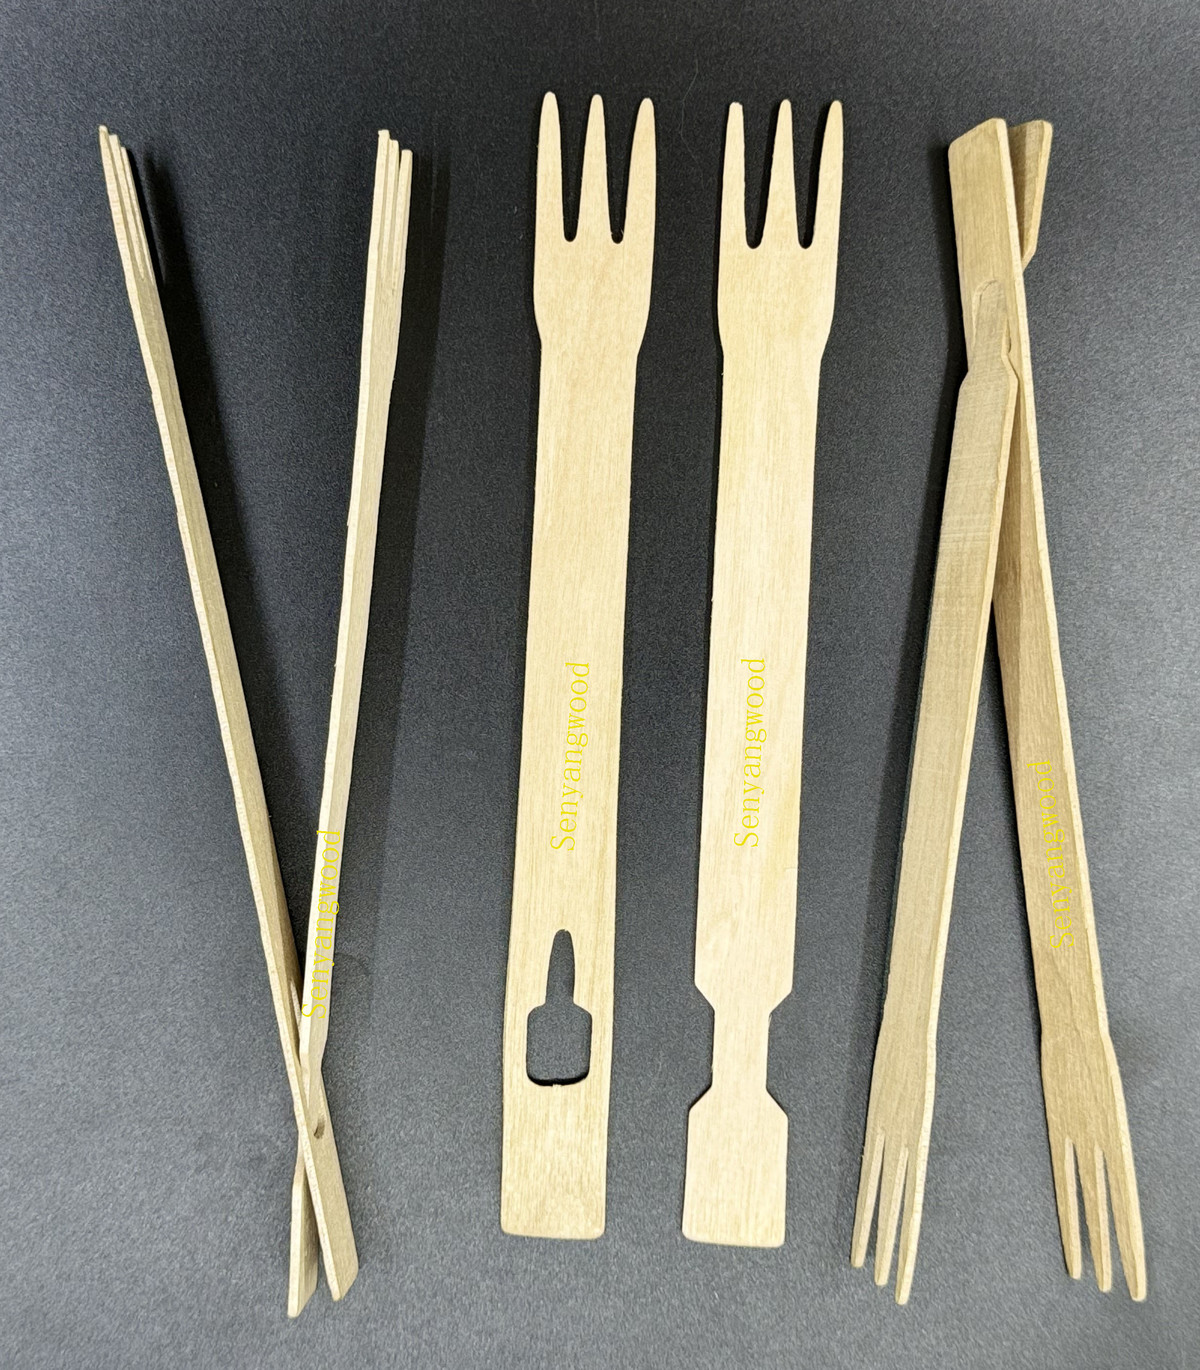 180 mm wooden fork chopsticks in pair.